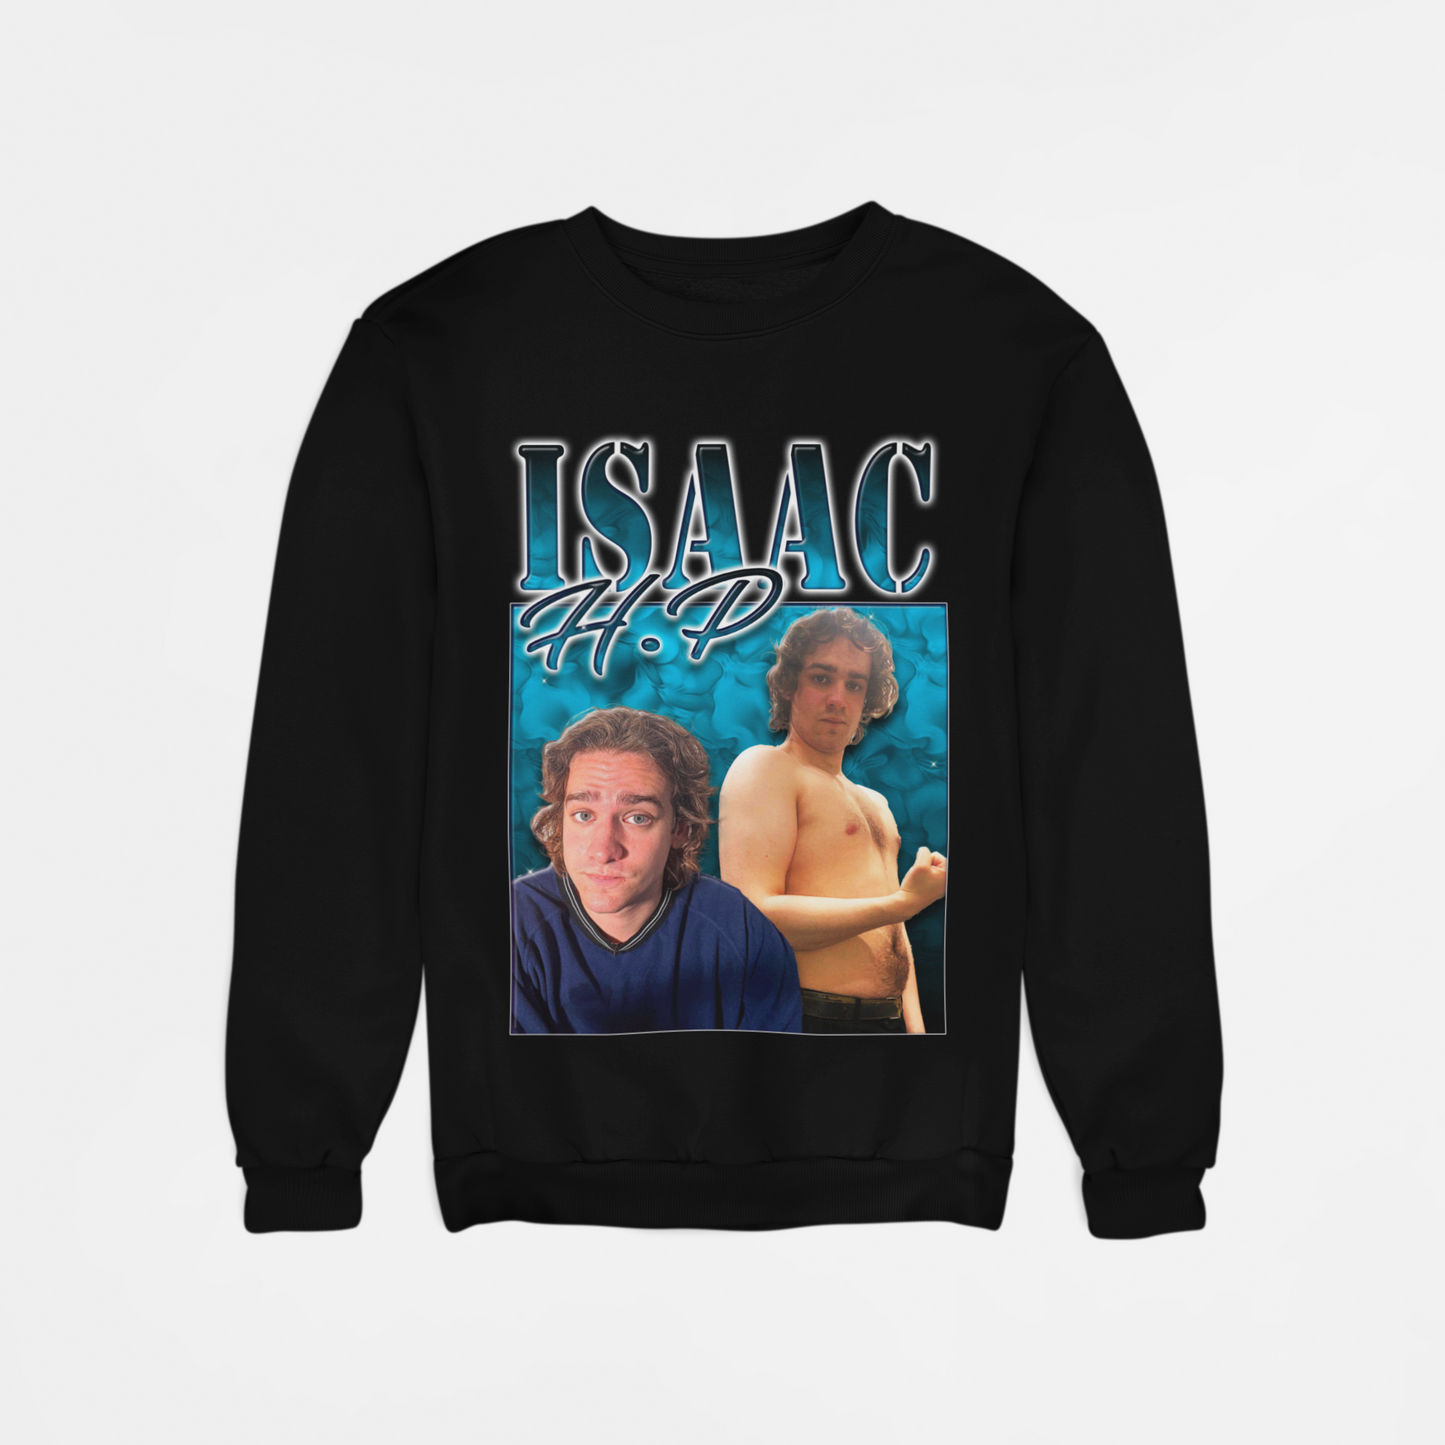 Isaac H.P Vintage Sweatshirt